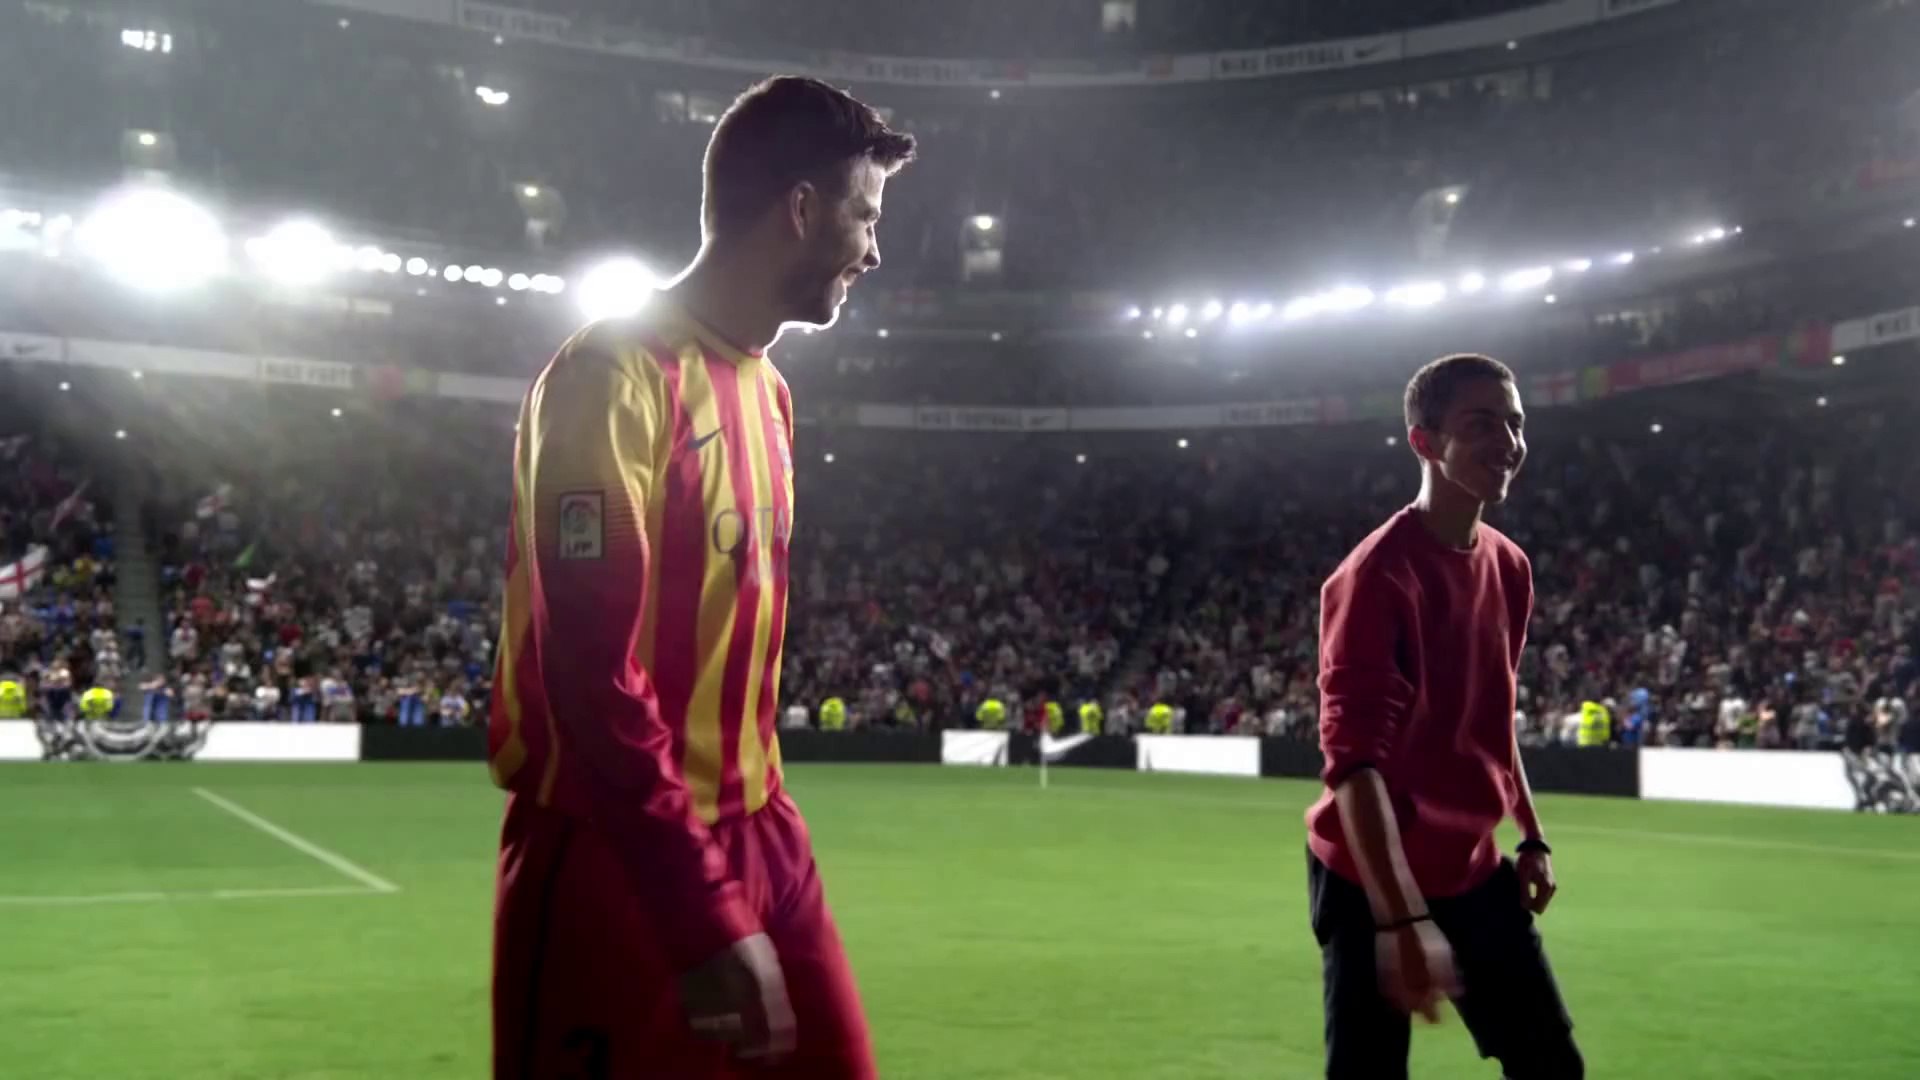 Nike football - Winner Stays ft. Ronaldo, Neymar, Rooney; Song_ Miss Alissa  - Eagles of Death Metal - Dailymotion Video